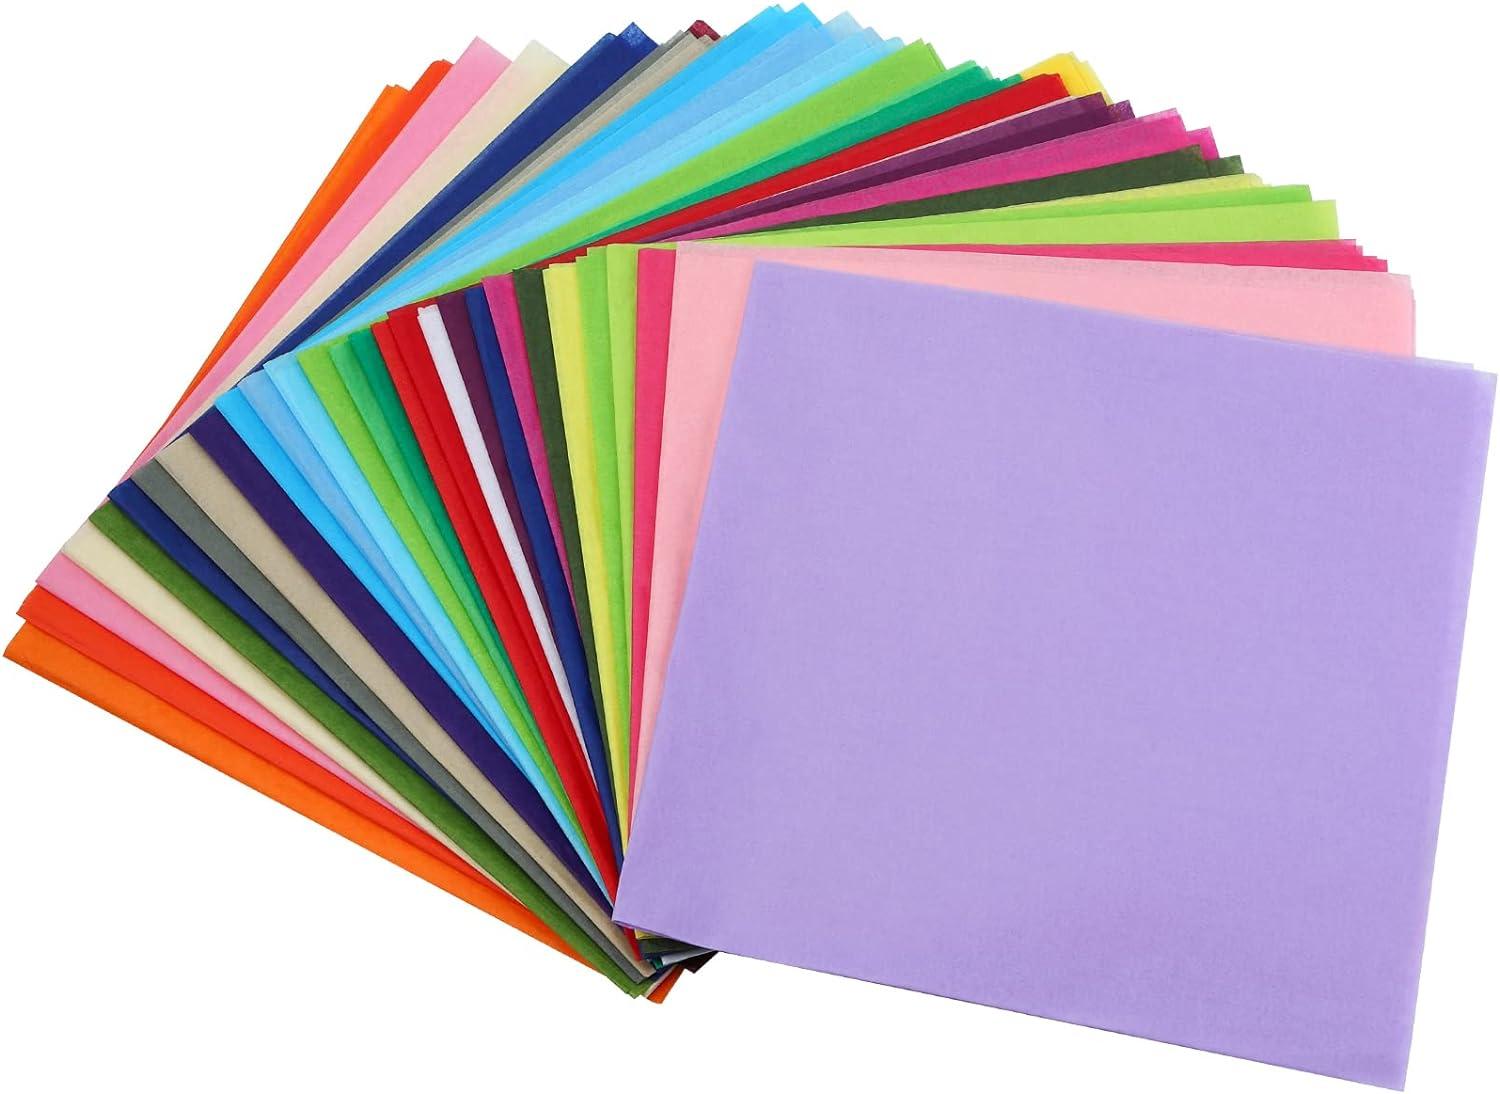 Solf Levender Tissue Paper Squares, Bulk 100 Sheets, Premium Gift